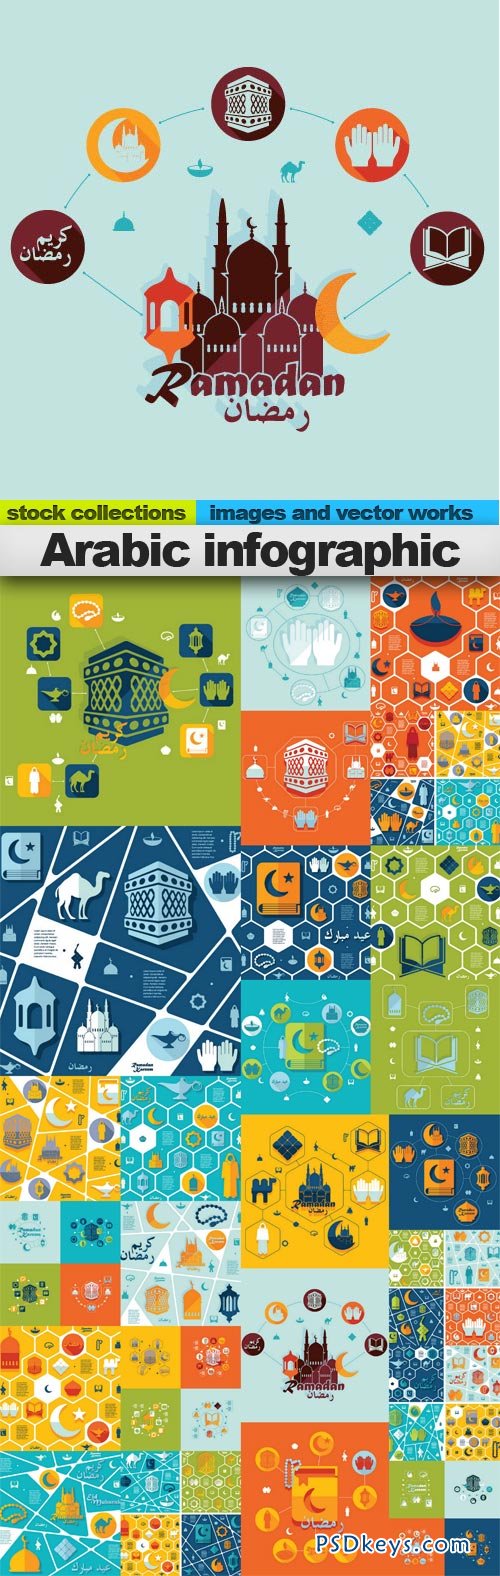 Arabic infographic 25xEPS